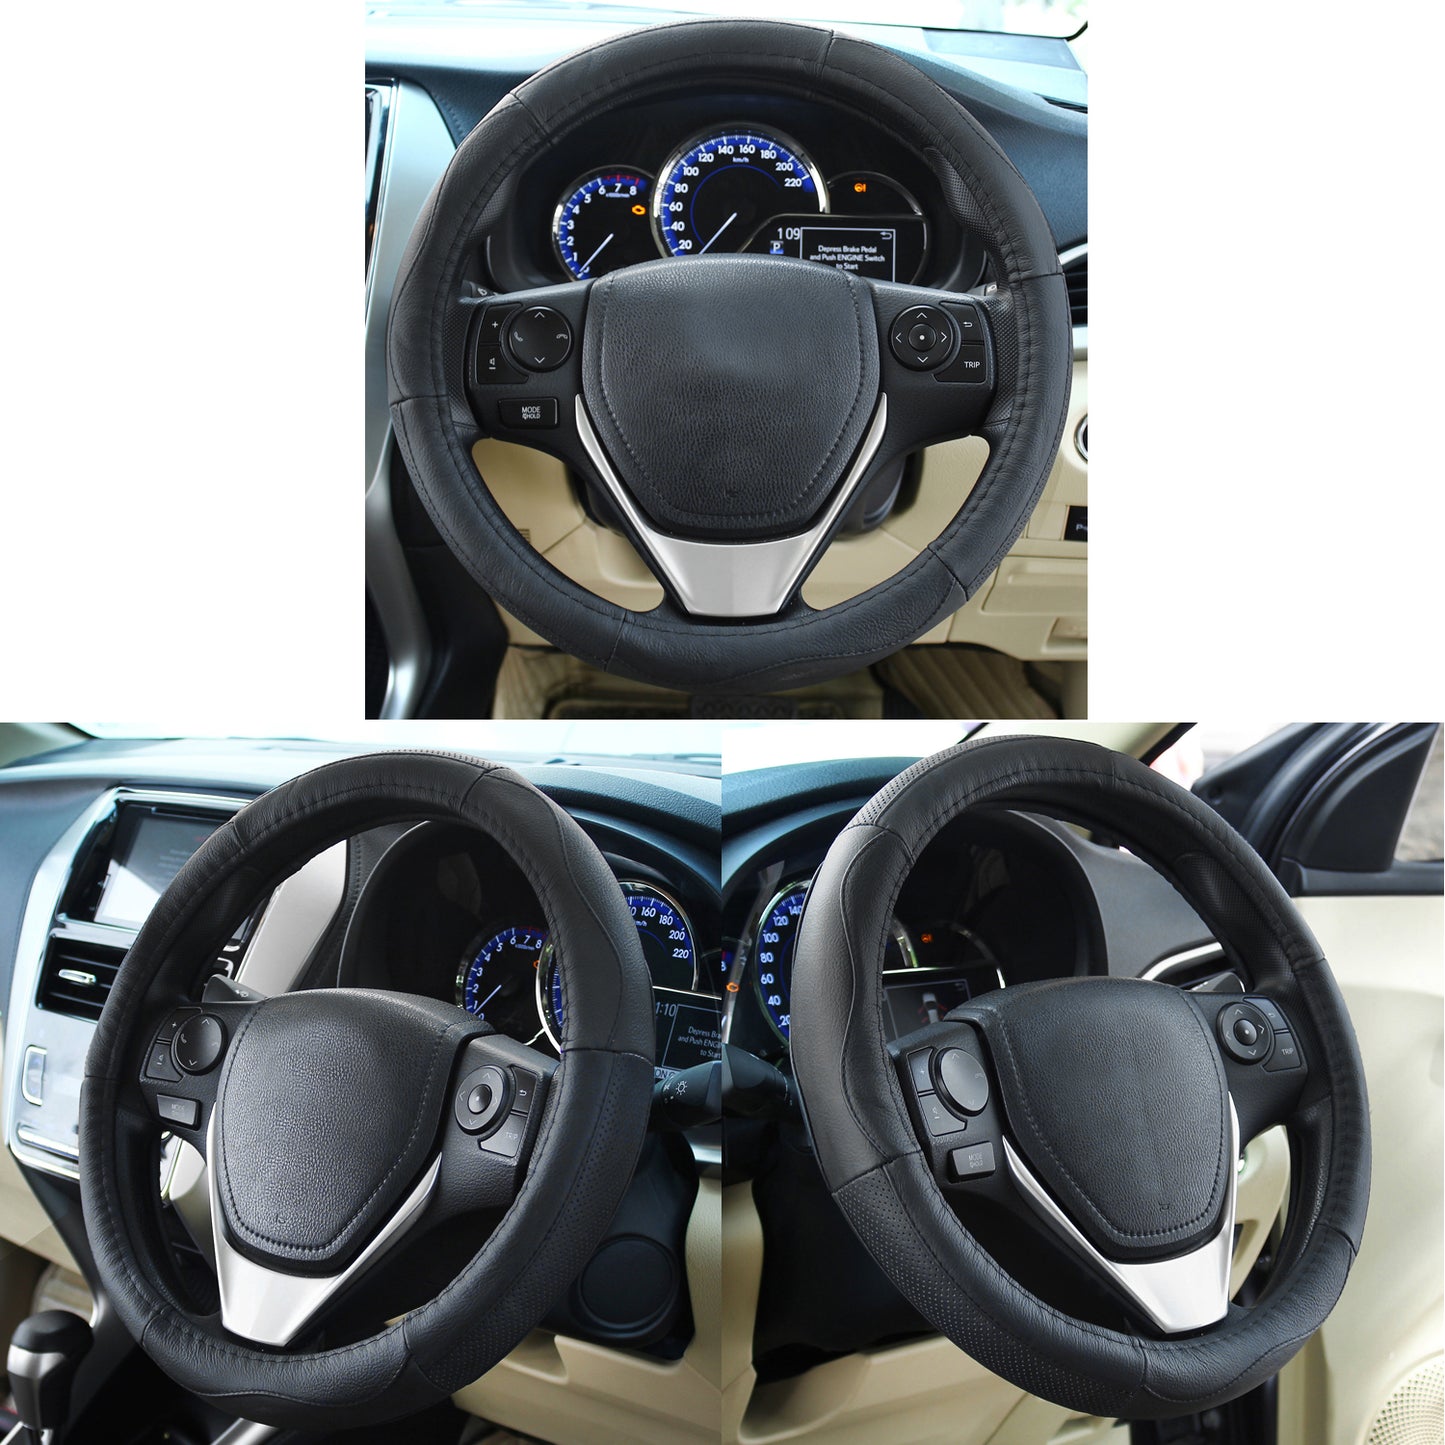 Oshotto SC-005 Leather Car Steering Cover (Black,Medium)